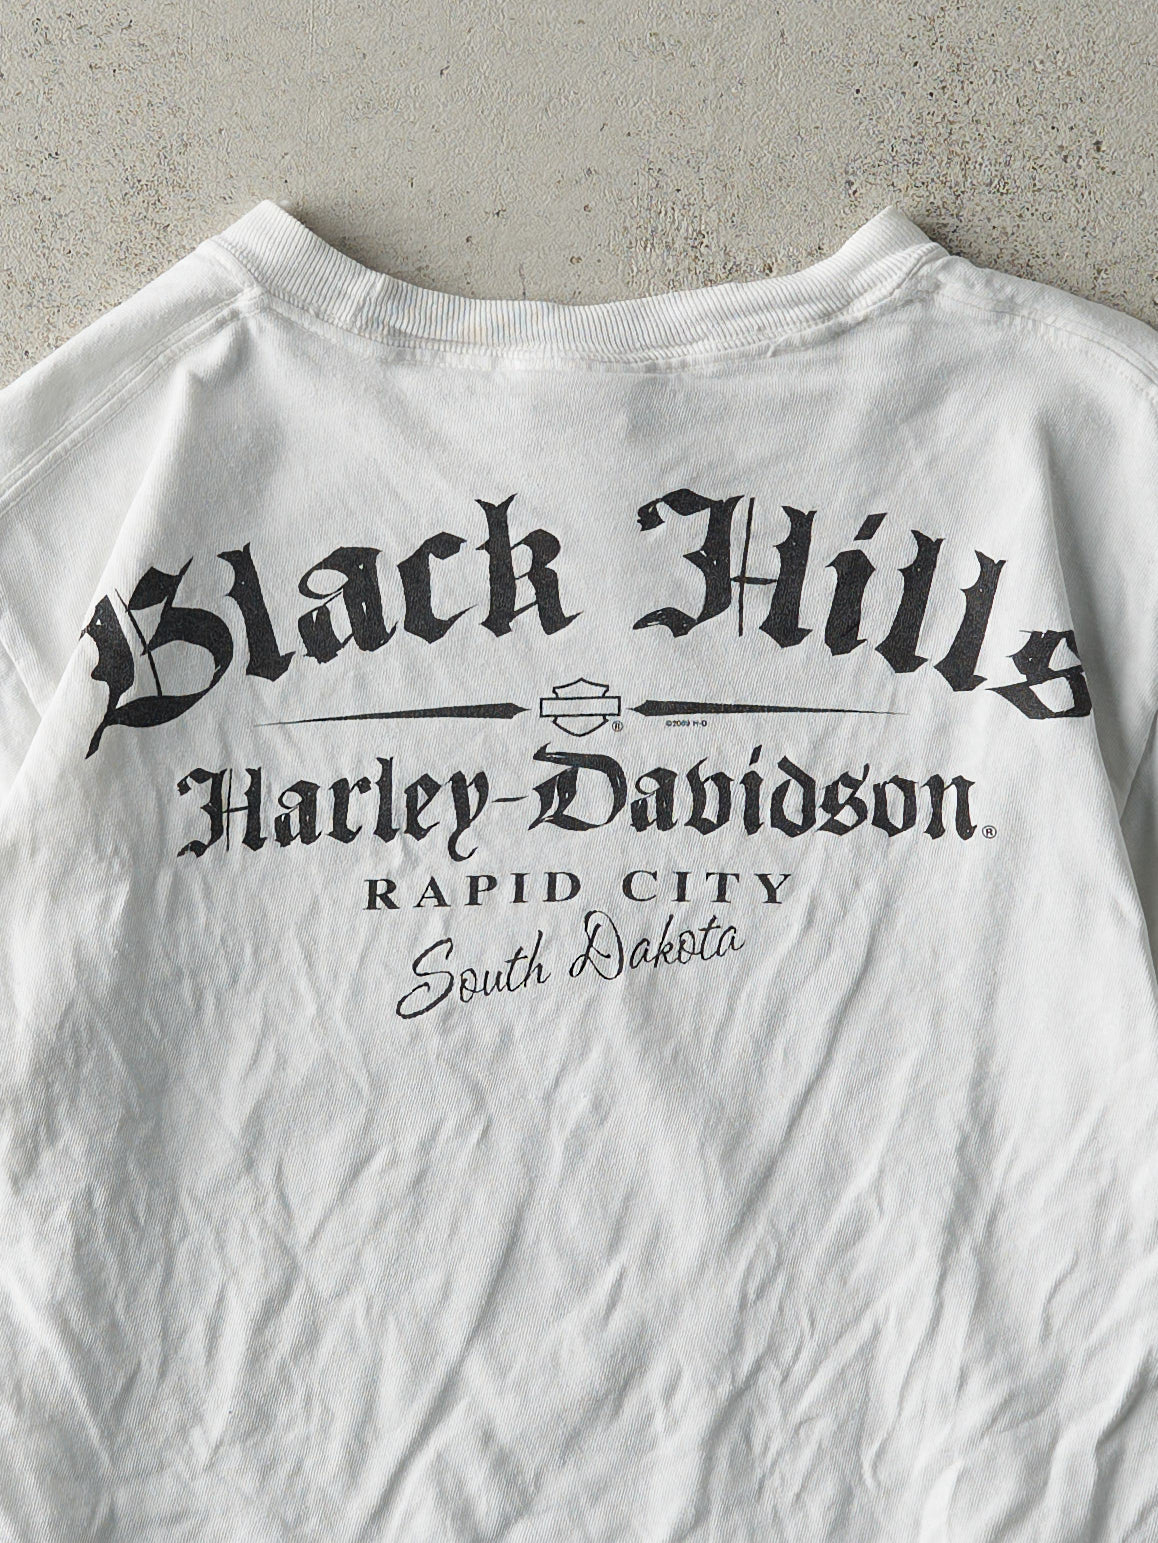 11' White Black Hills South Dakota Harley Davidson Tee (XS)